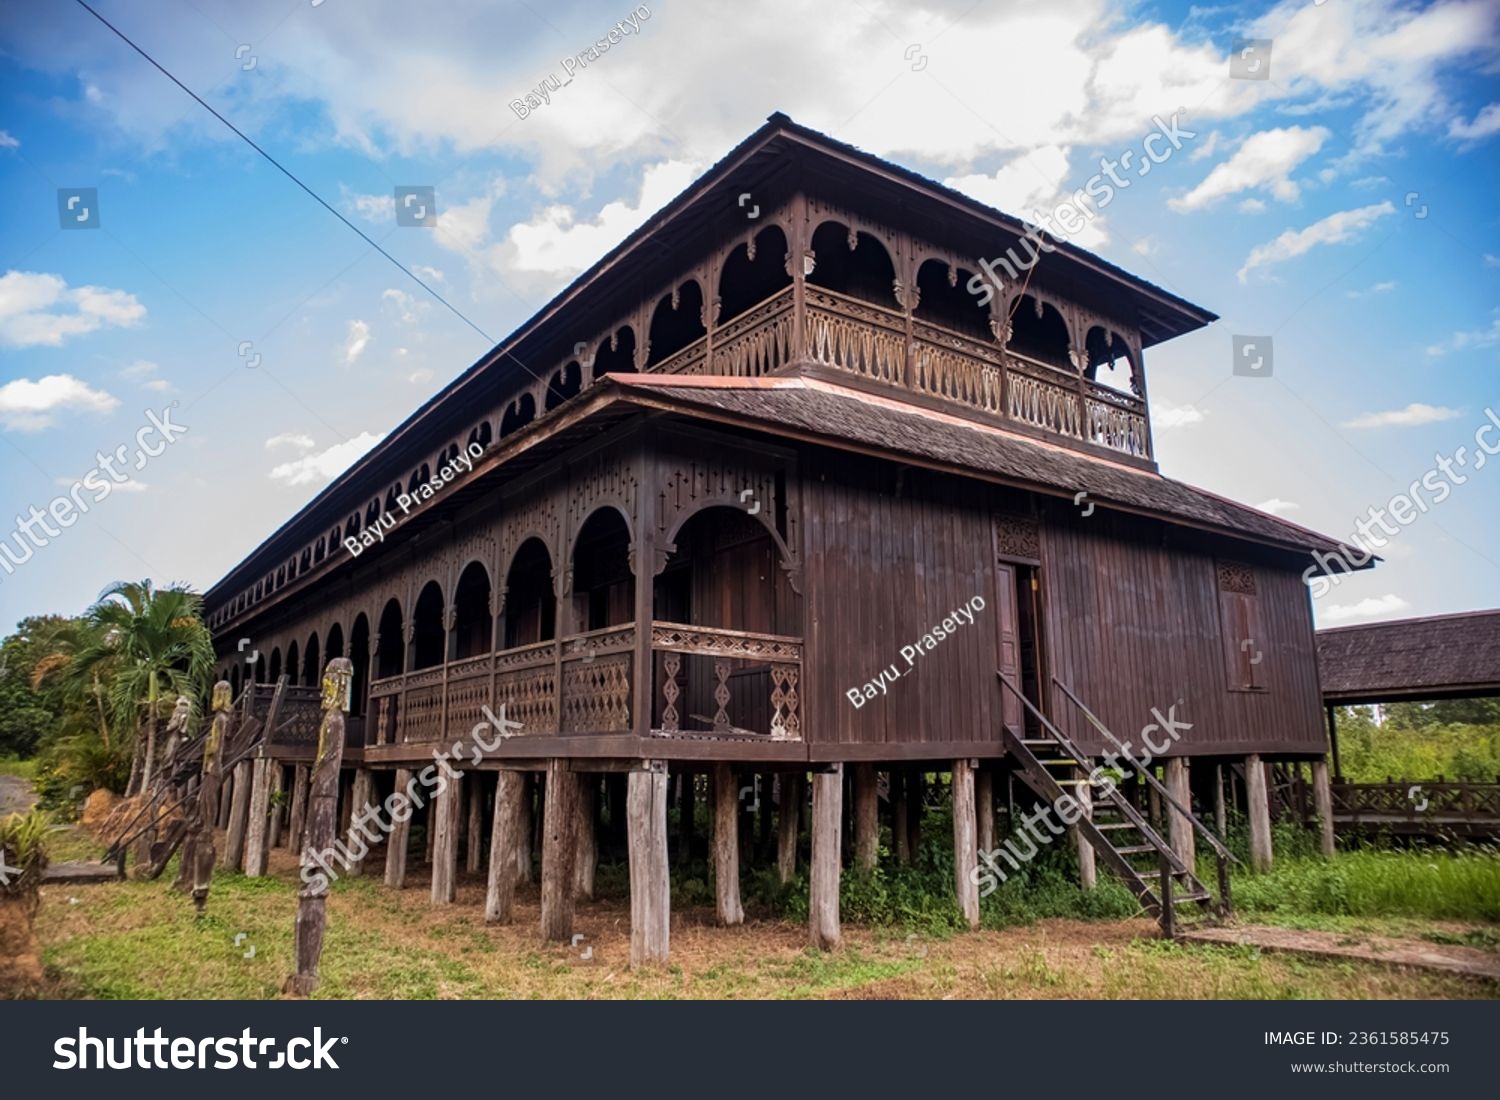 Traditional dayaknese house called "Rumah Panjang" (Long House) in Pulau Kumala, Kutai Kartanegara, East Kalimantan, Indonesia. #2361585475